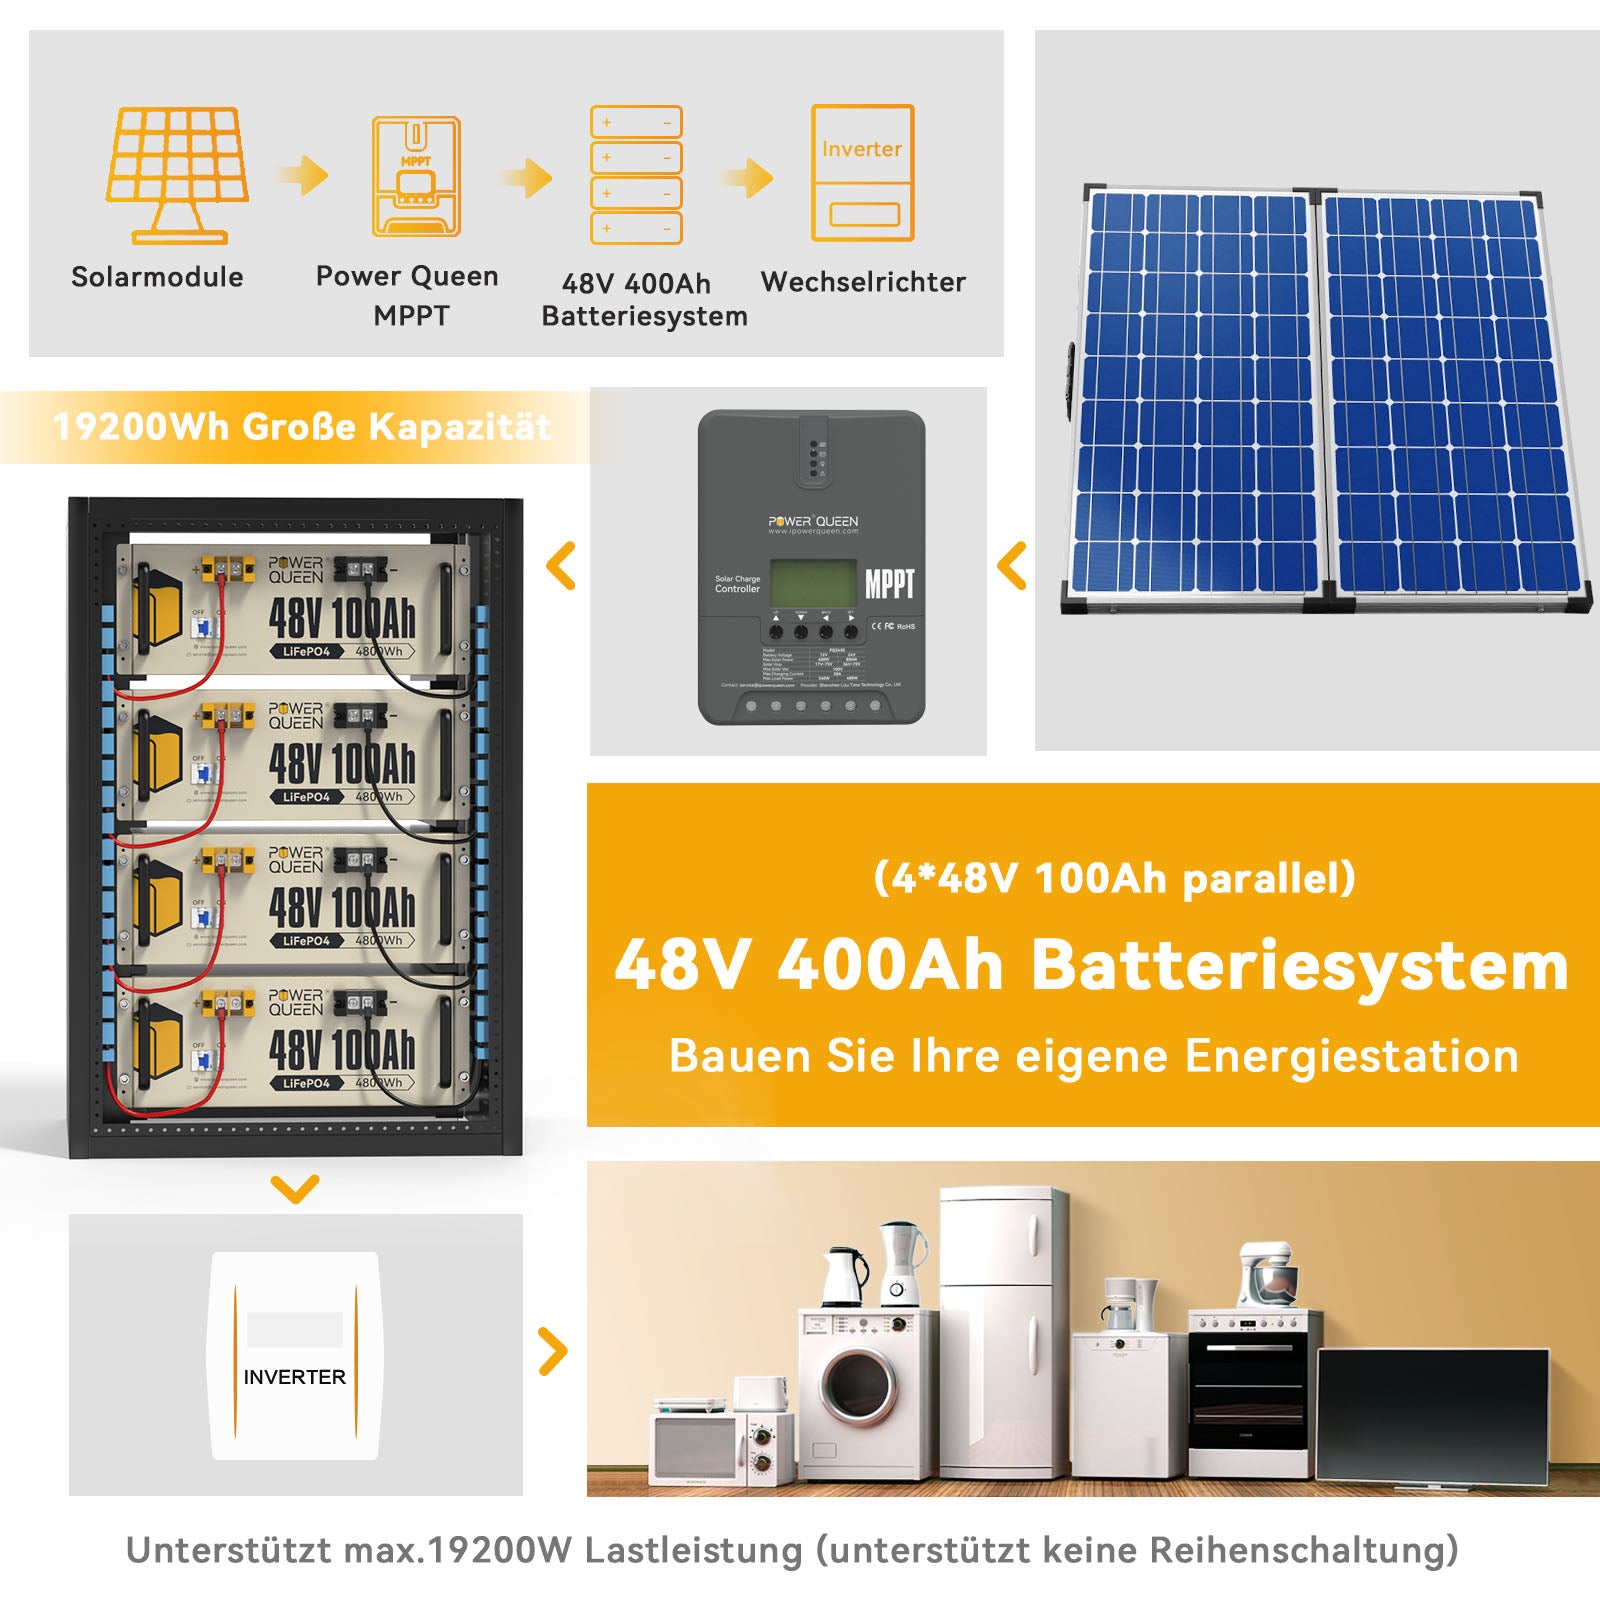 【0% IVA】Batteria Power Queen 48V 100Ah LiFePO4, BMS 100A integrato